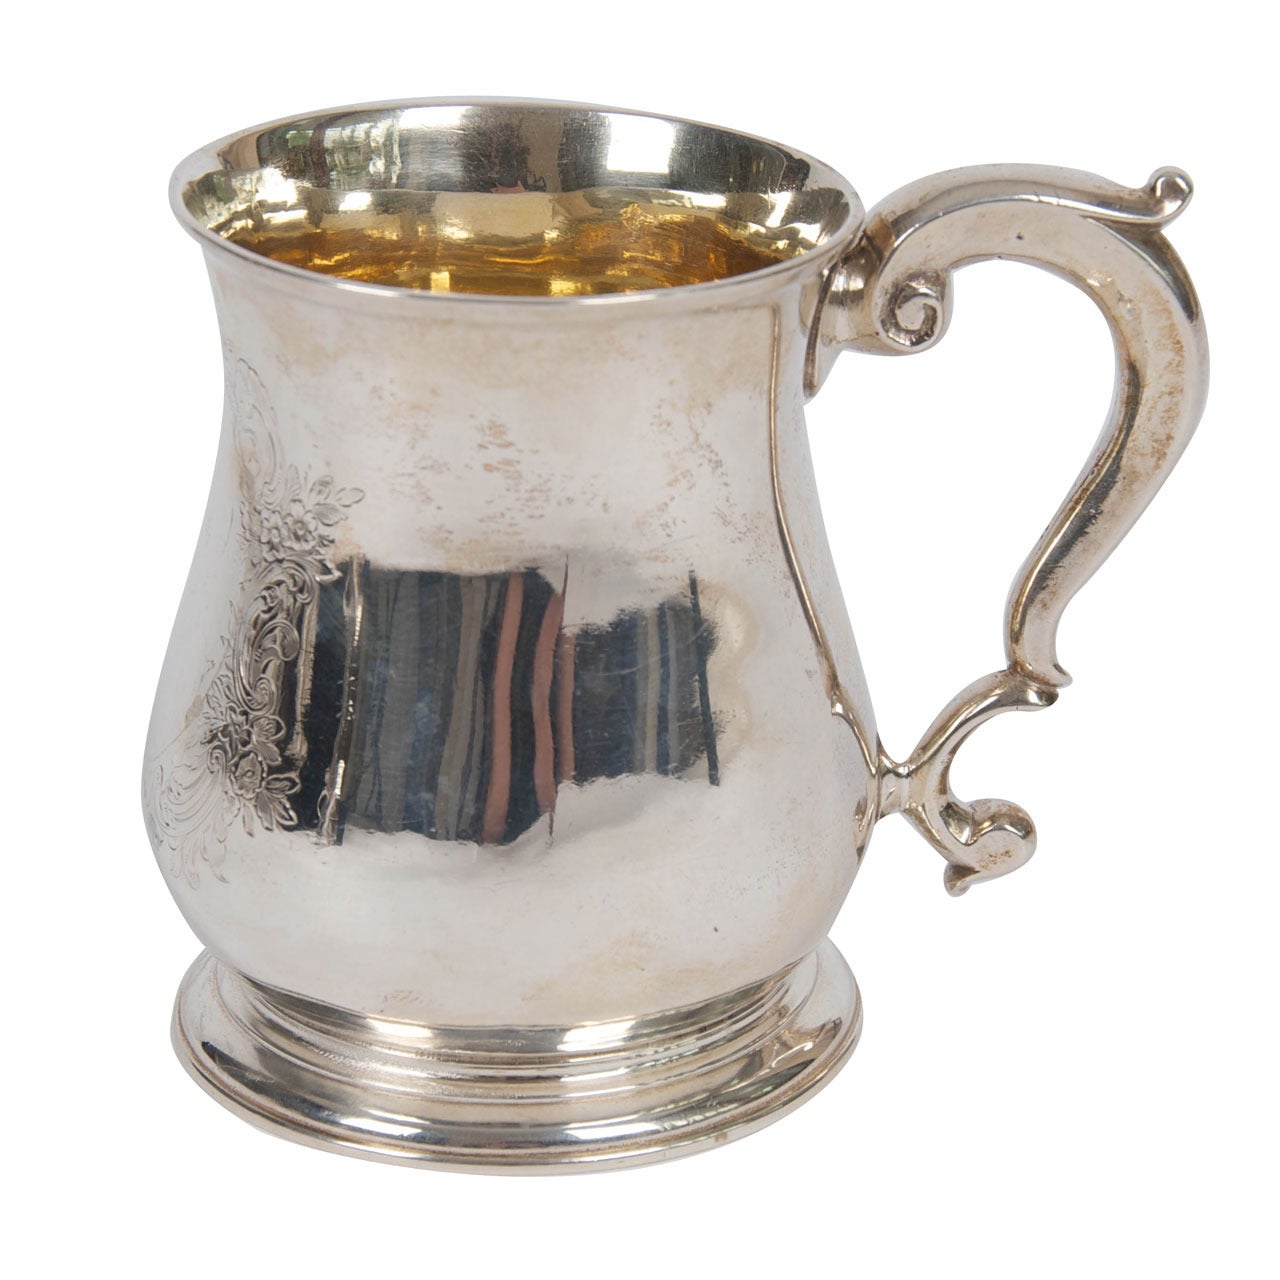 1735, George II, Sterling Silver, Pint Mug or Tankard by Ben Cartwright, London